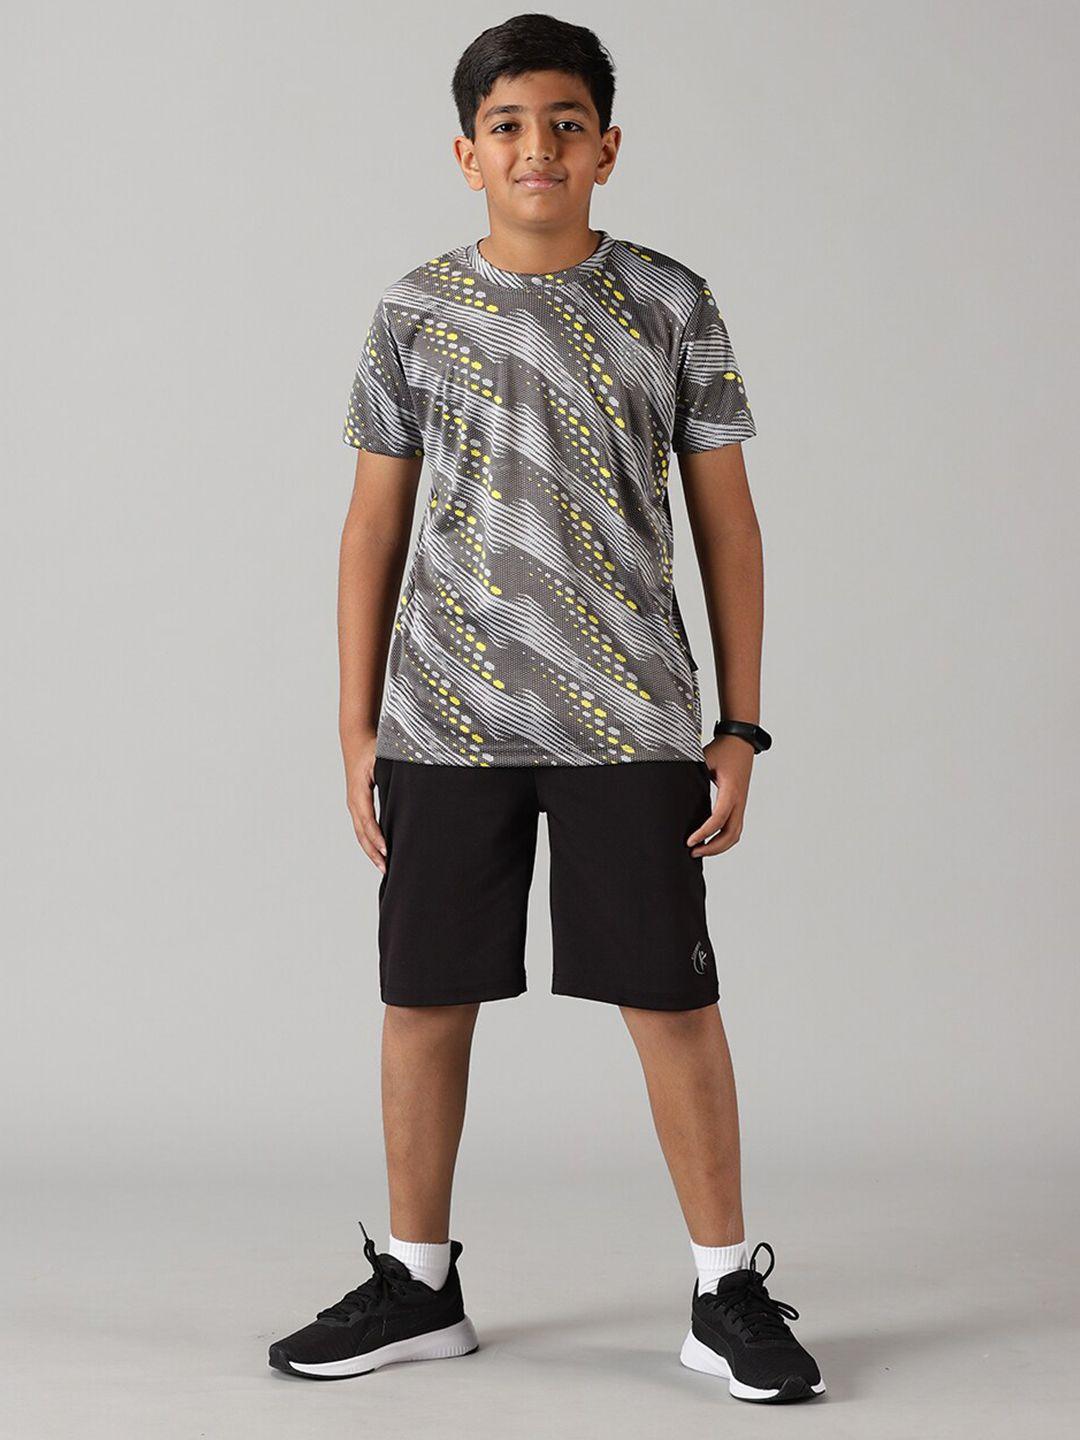 kiddopanti-boys-printed-short-sleeves-sports-t-shirt-with-shorts-clothing-set